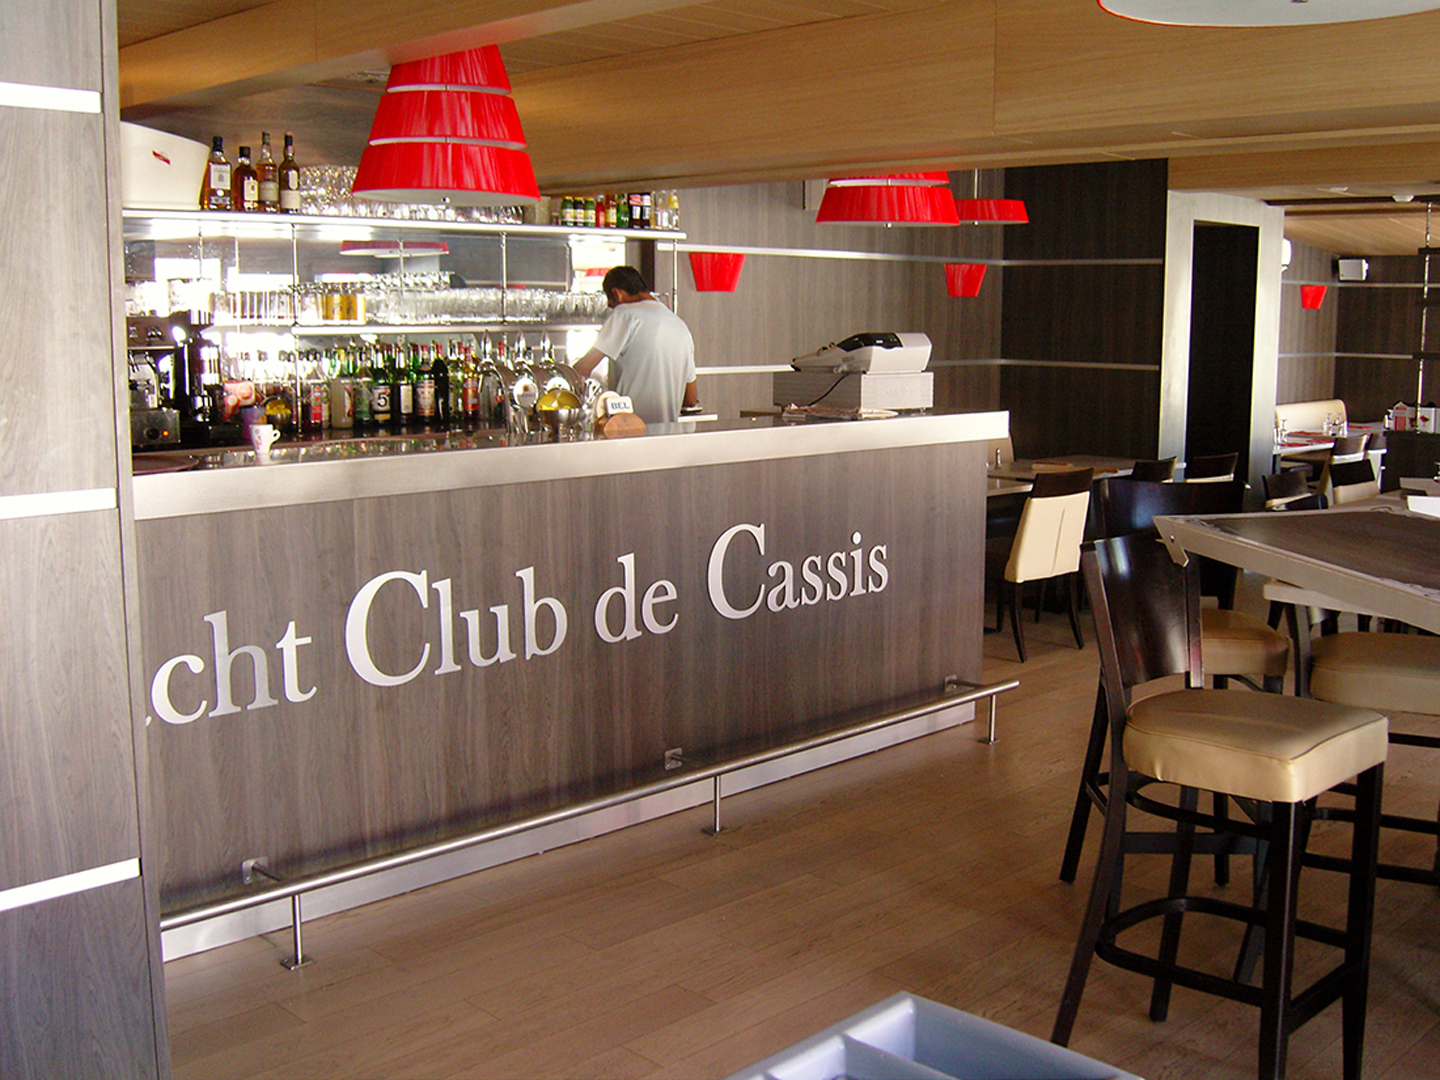 yacht club restaurant cassis